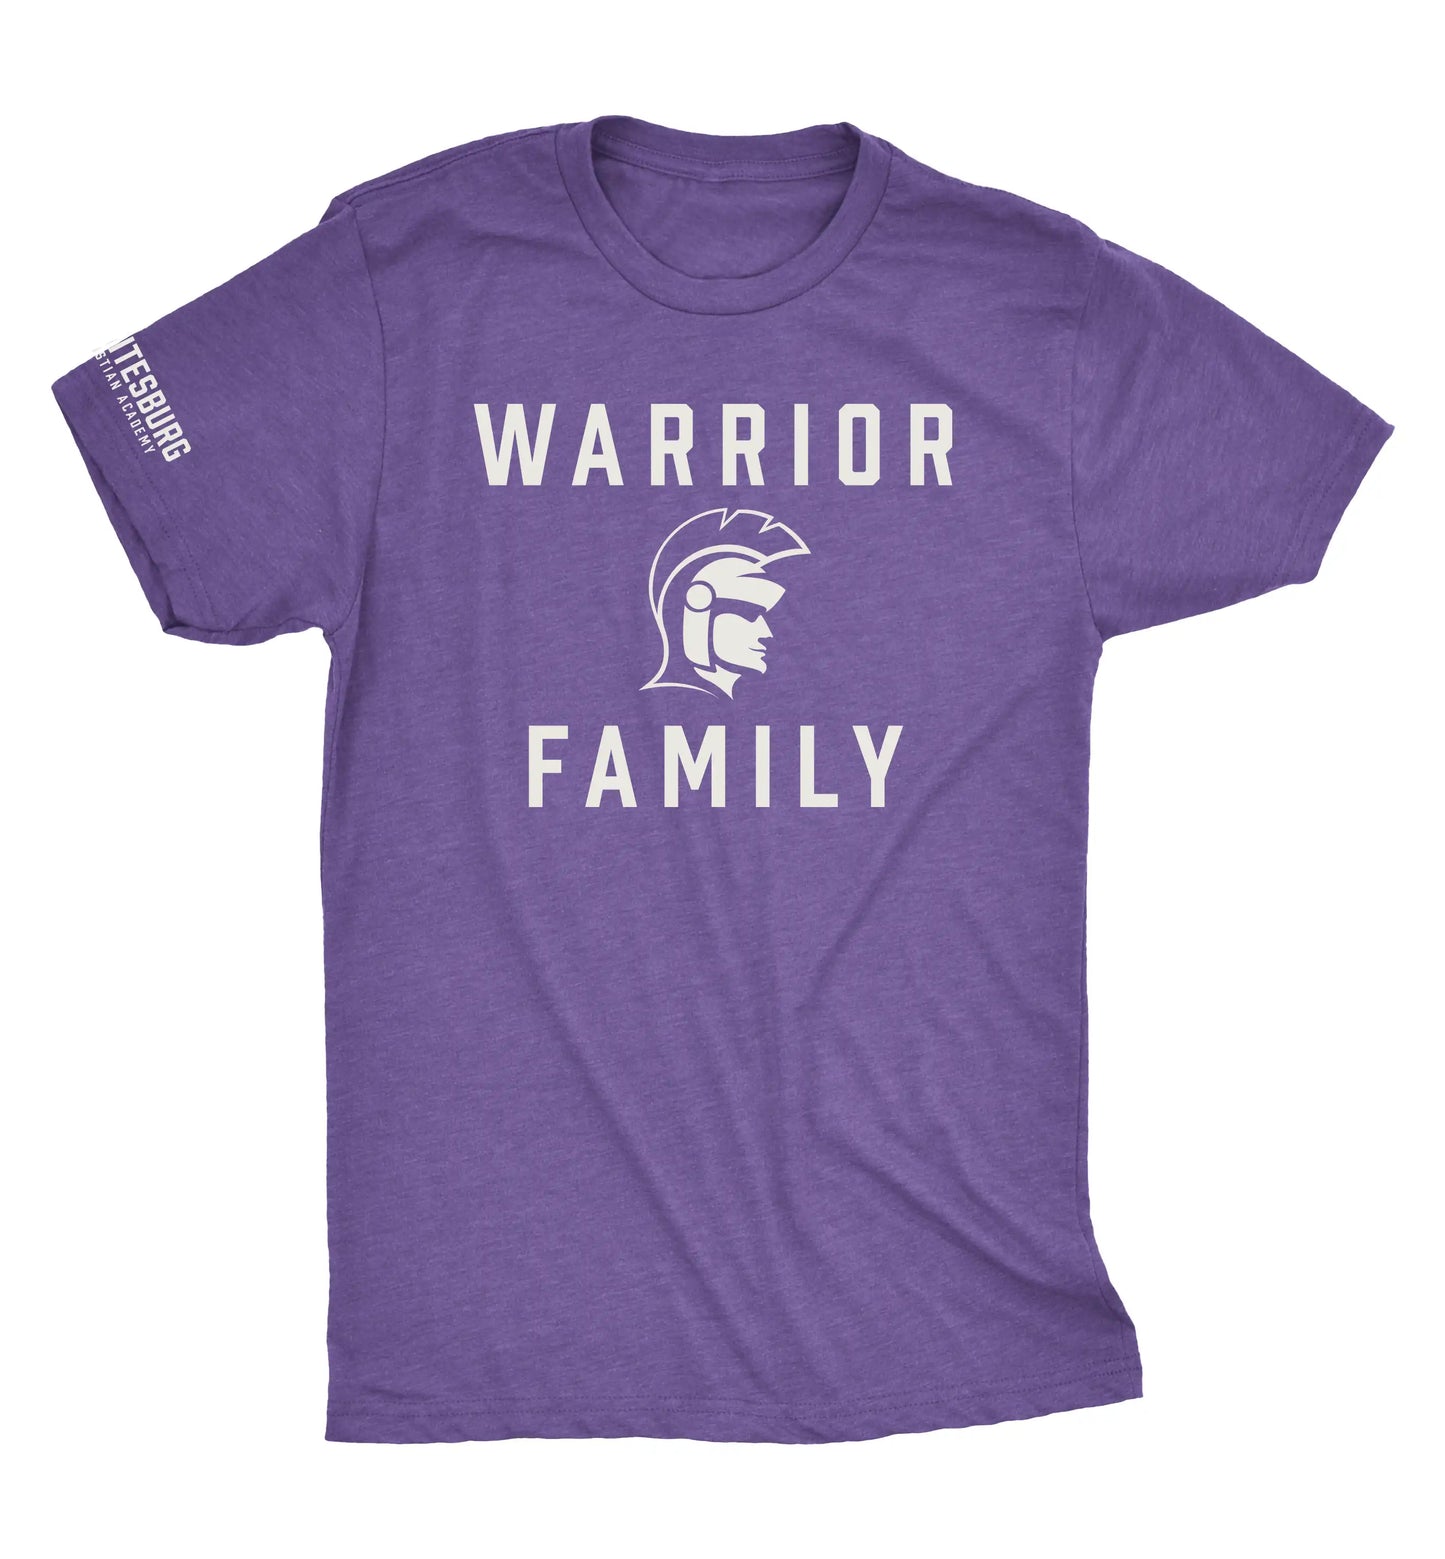 WARRIOR FAMILY Tshirt